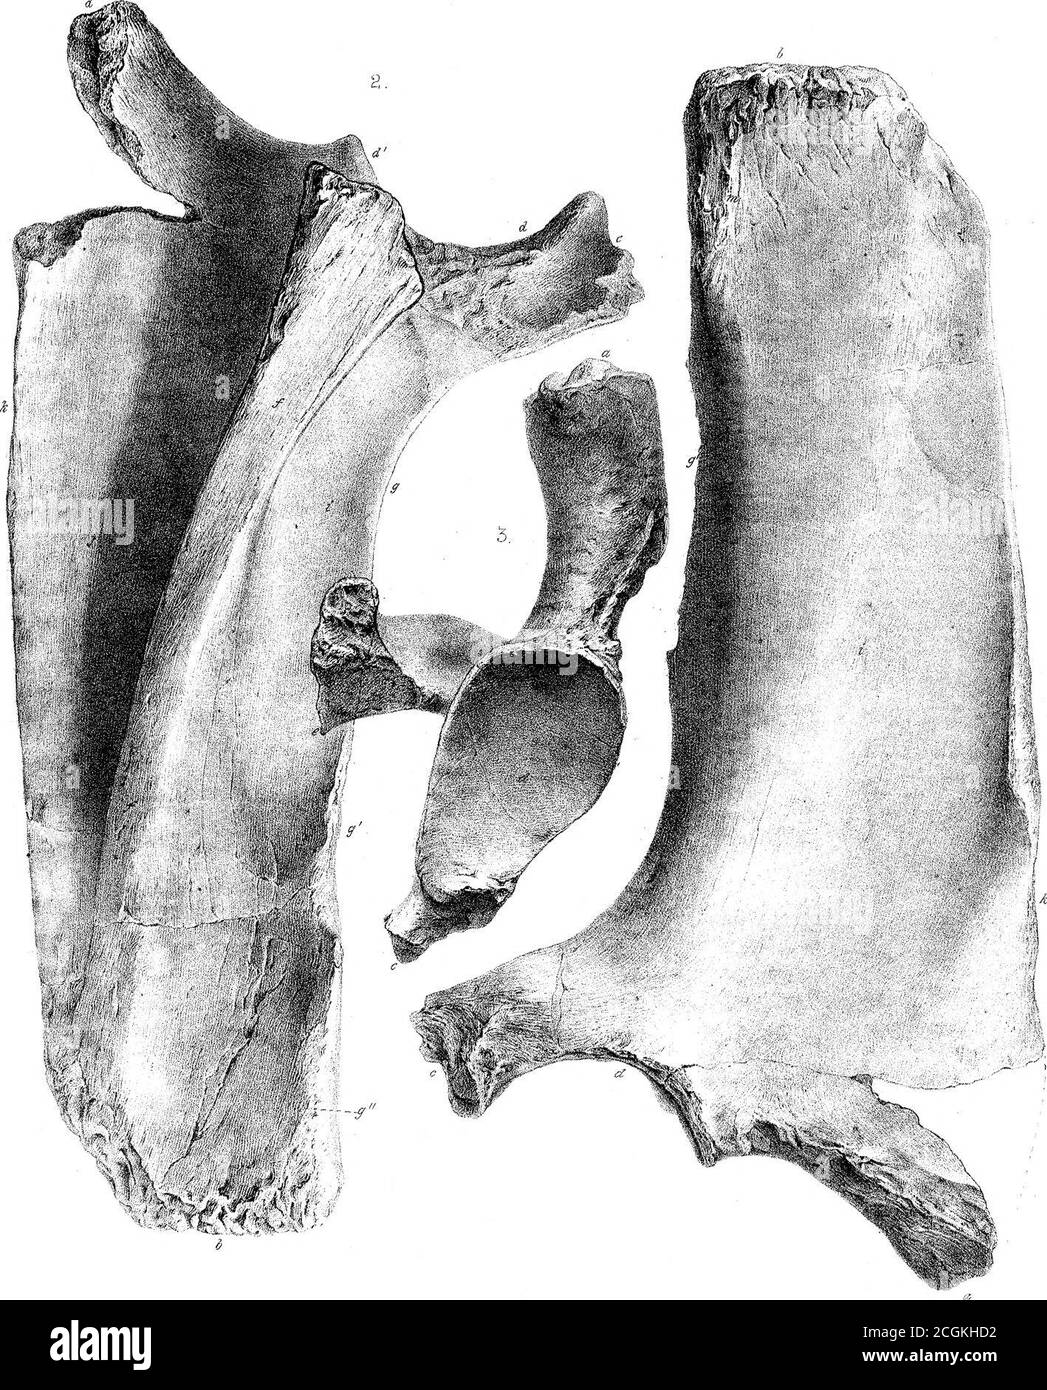 . Sui mammiferi fossili dell'Australia. Parte III. Diprotodon australis, Owen . W. H. Wesley Jiih. West imp. OWM,. Phxl. 7ra^5.MDCCCLXX.P/,ai^ XLV,. •W.H.Wesley iLtk. West iiMp. Owen-. PMy. Trans ml) CCaH. FUUU XIM. 4^, Foto Stock